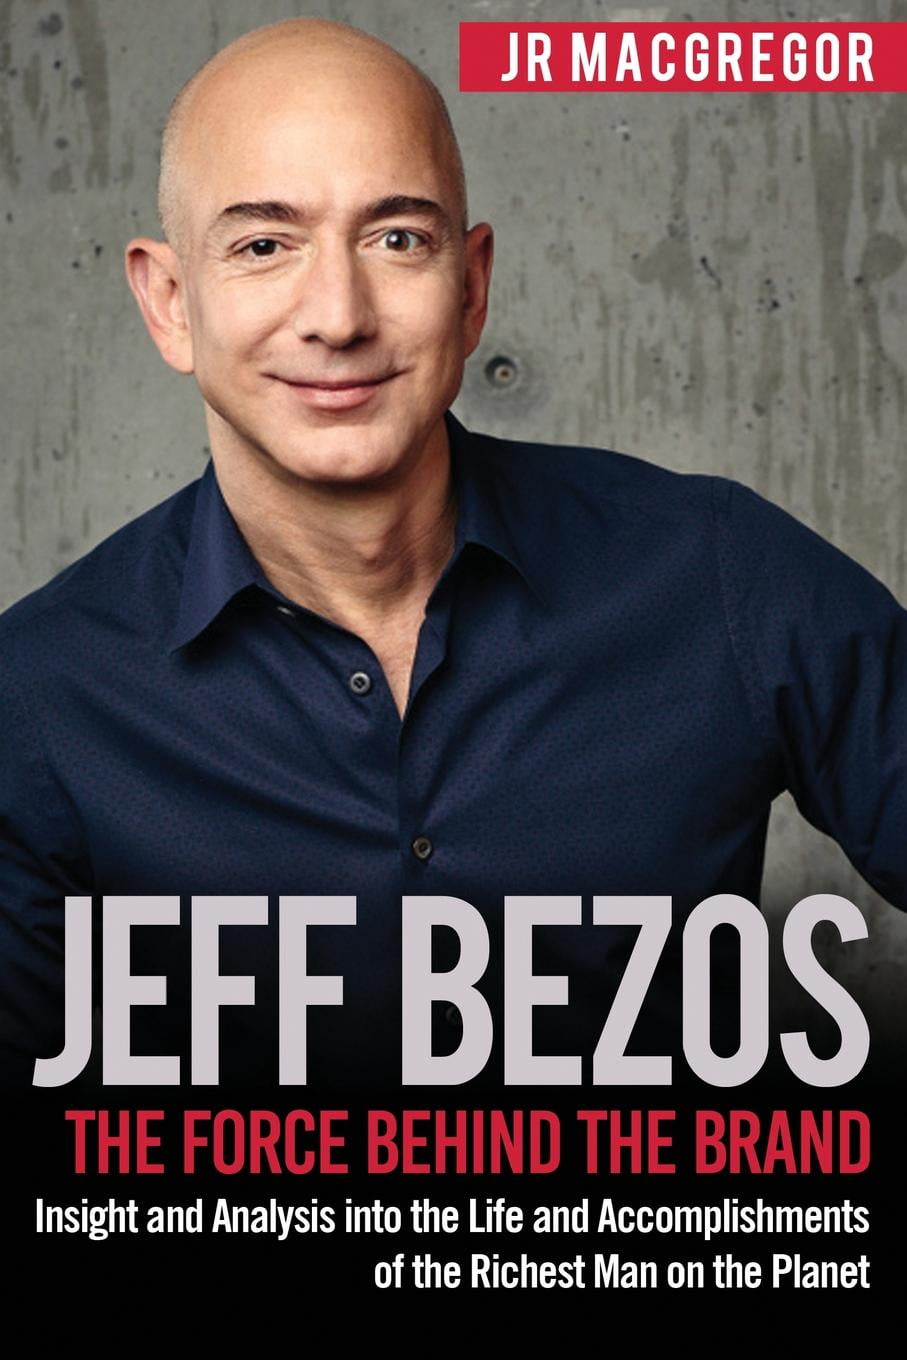 best biography of jeff bezos